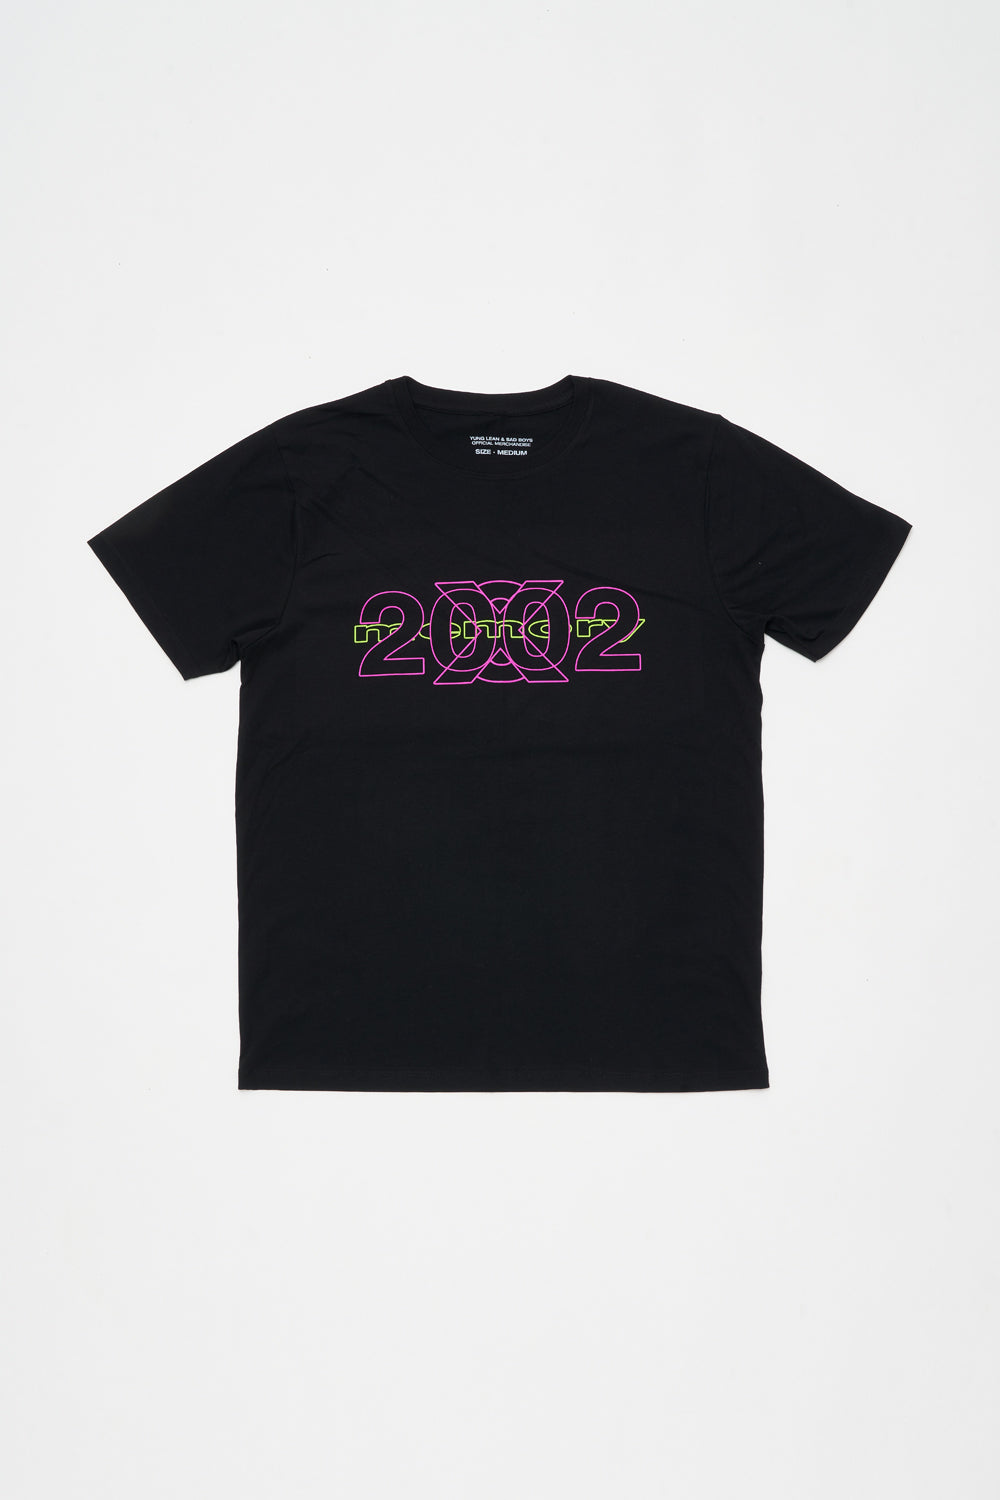 2002 T-SHIRT (BLACK) – Yung Lean & Sad Boys Official Merchandise (ROW)